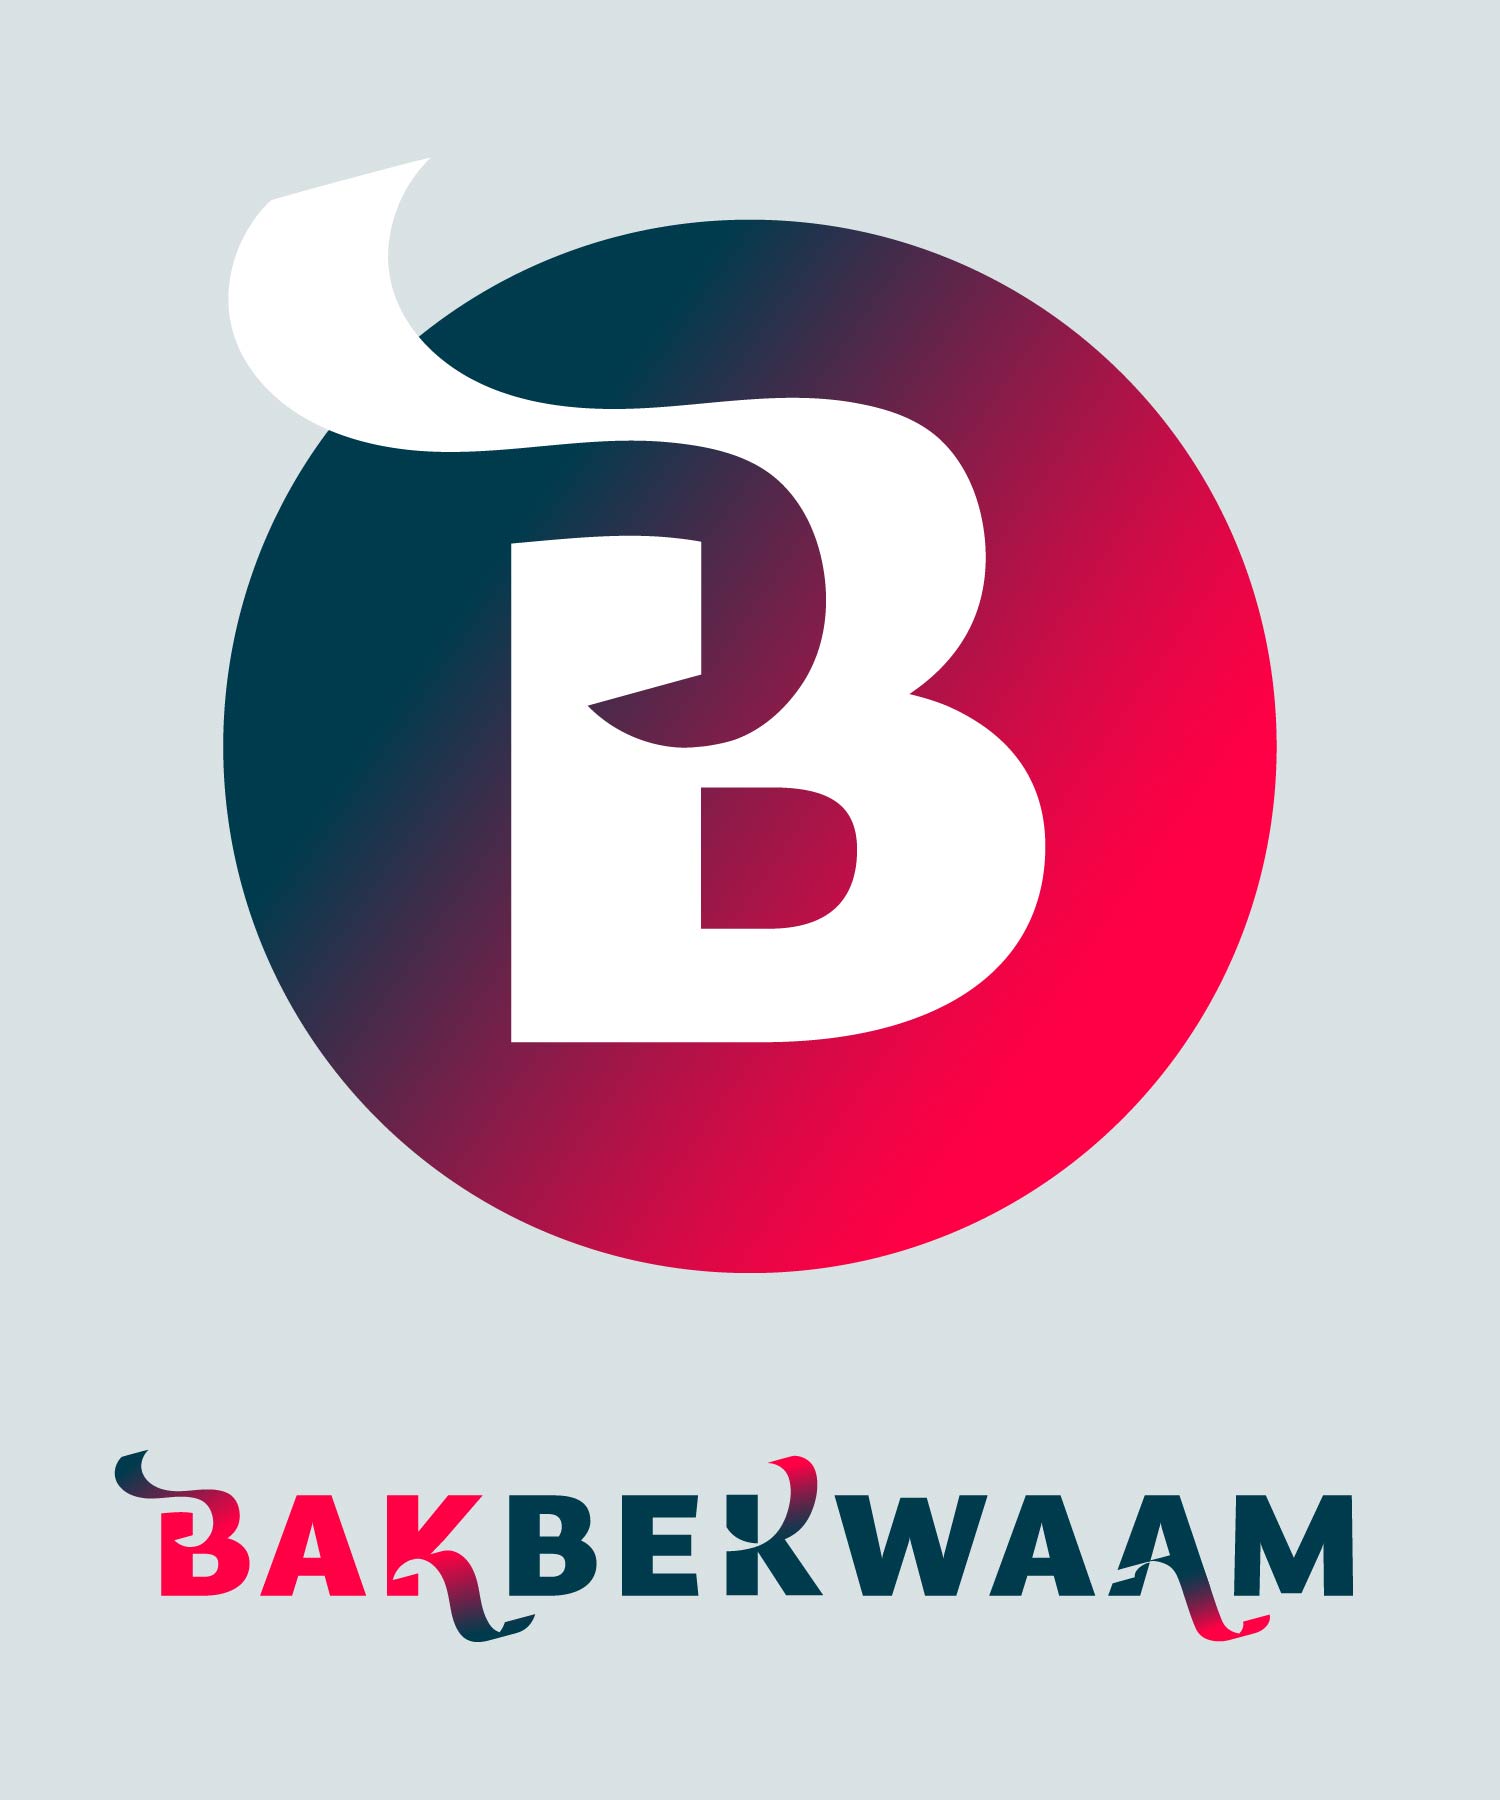 Bakbekwaam logo M-space